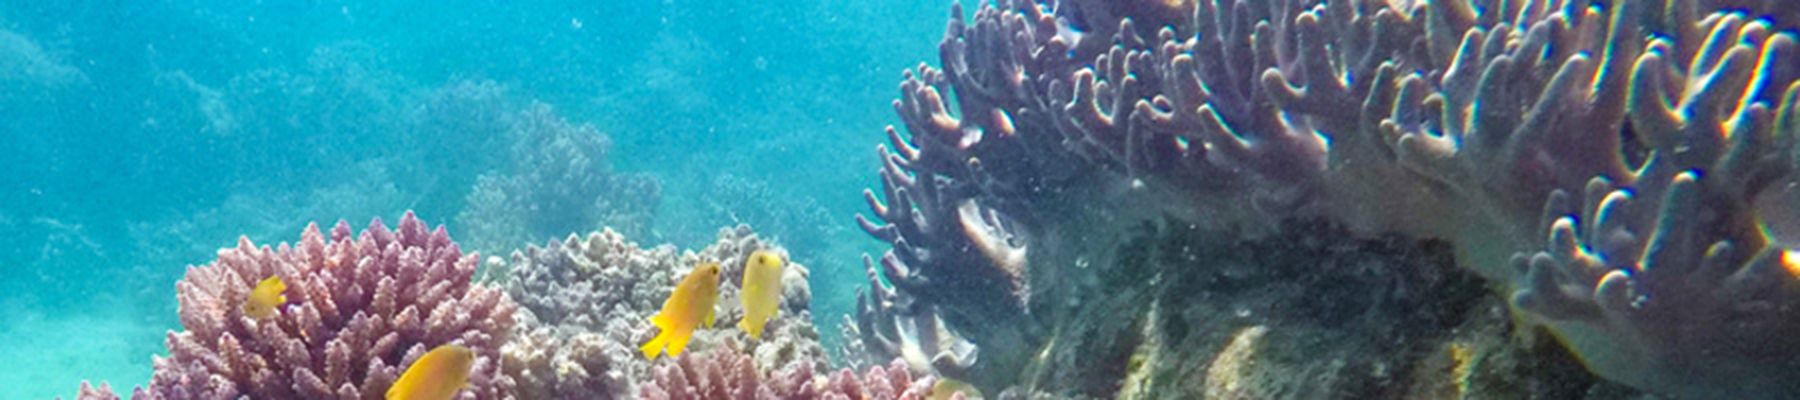 Underwater coral garden, Great Barrier Reef 